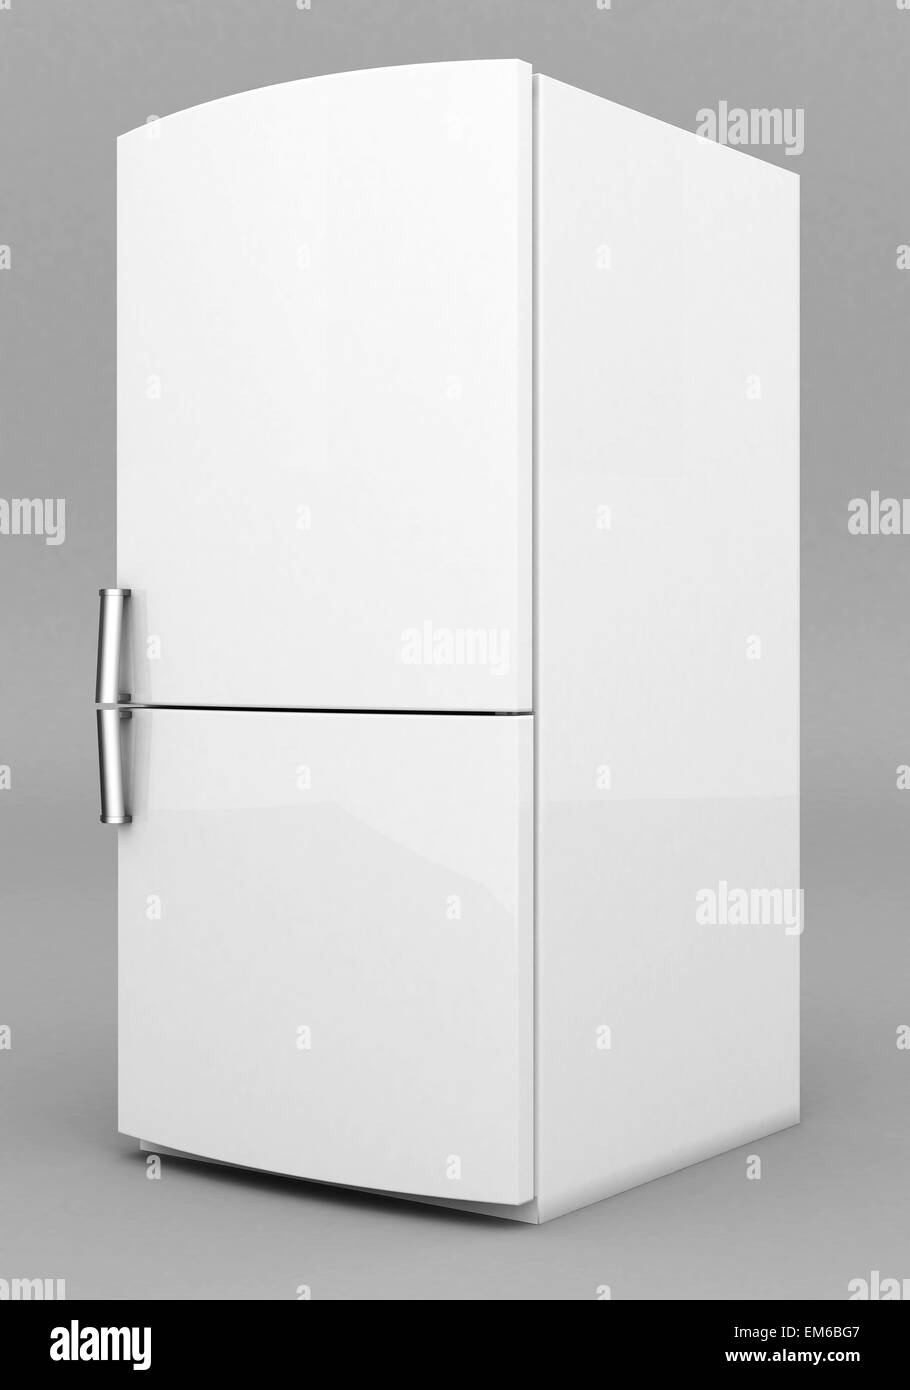 beautiful refrigerator Stock Photo